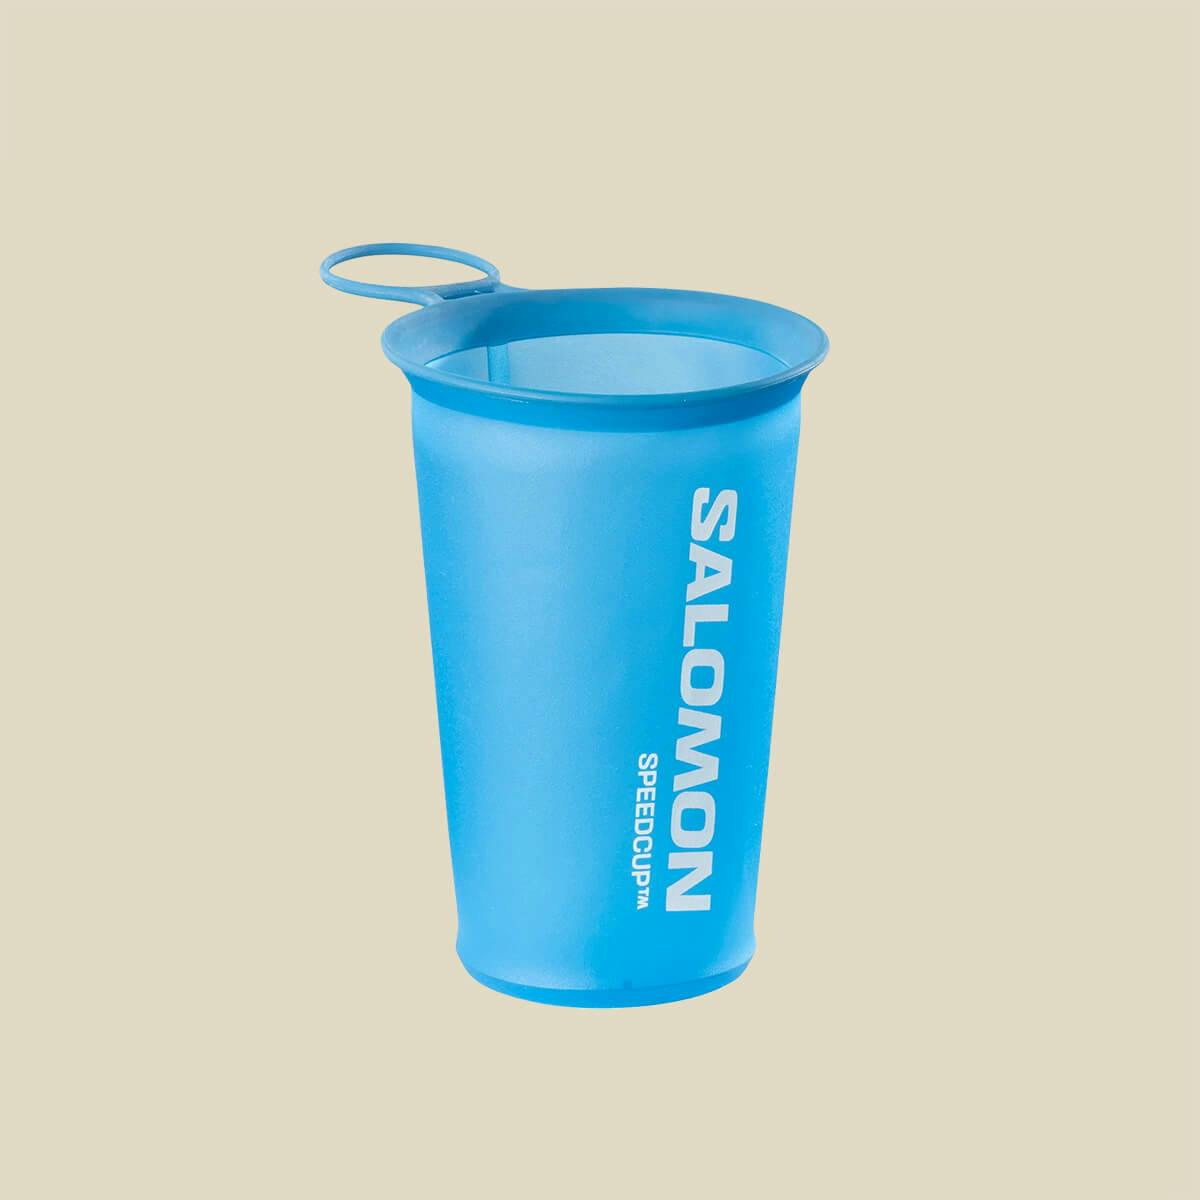 Soft Cup Speed 150 ml 5 oz - Clear Blue